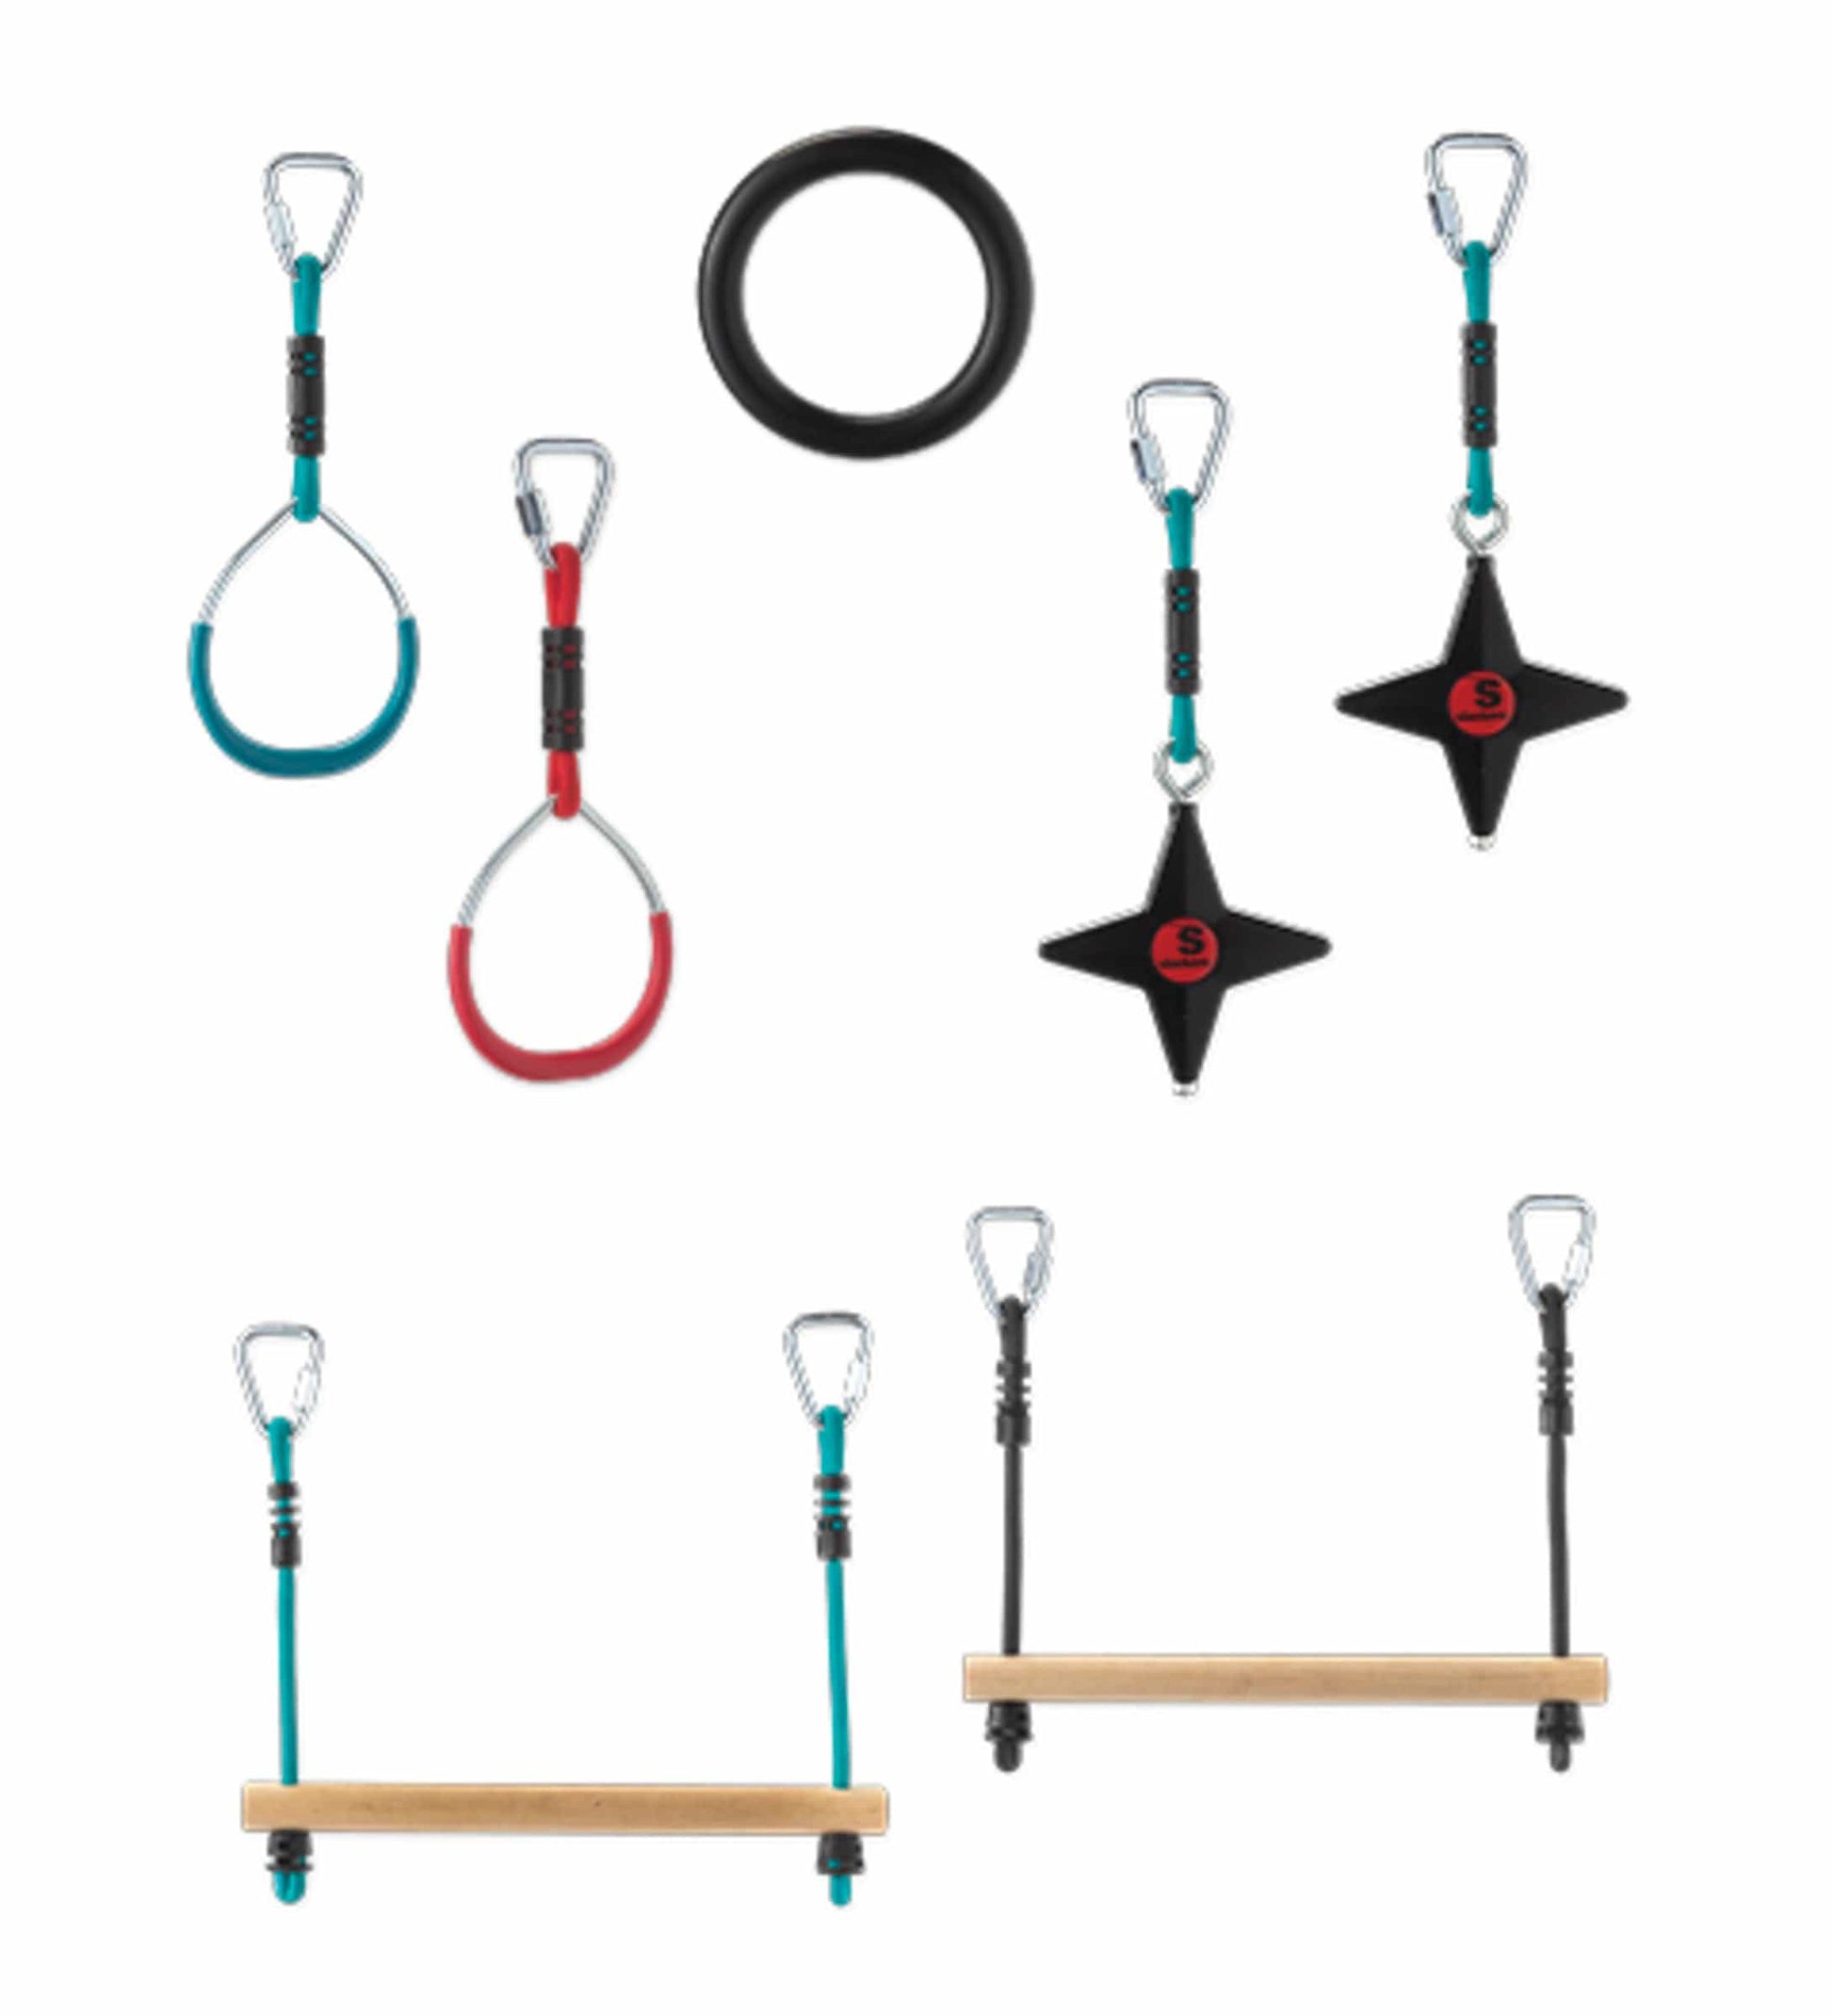 Ninjaline Ninja Star 7-Piece Hanging Obstacle Course Kit with Ninja Stars